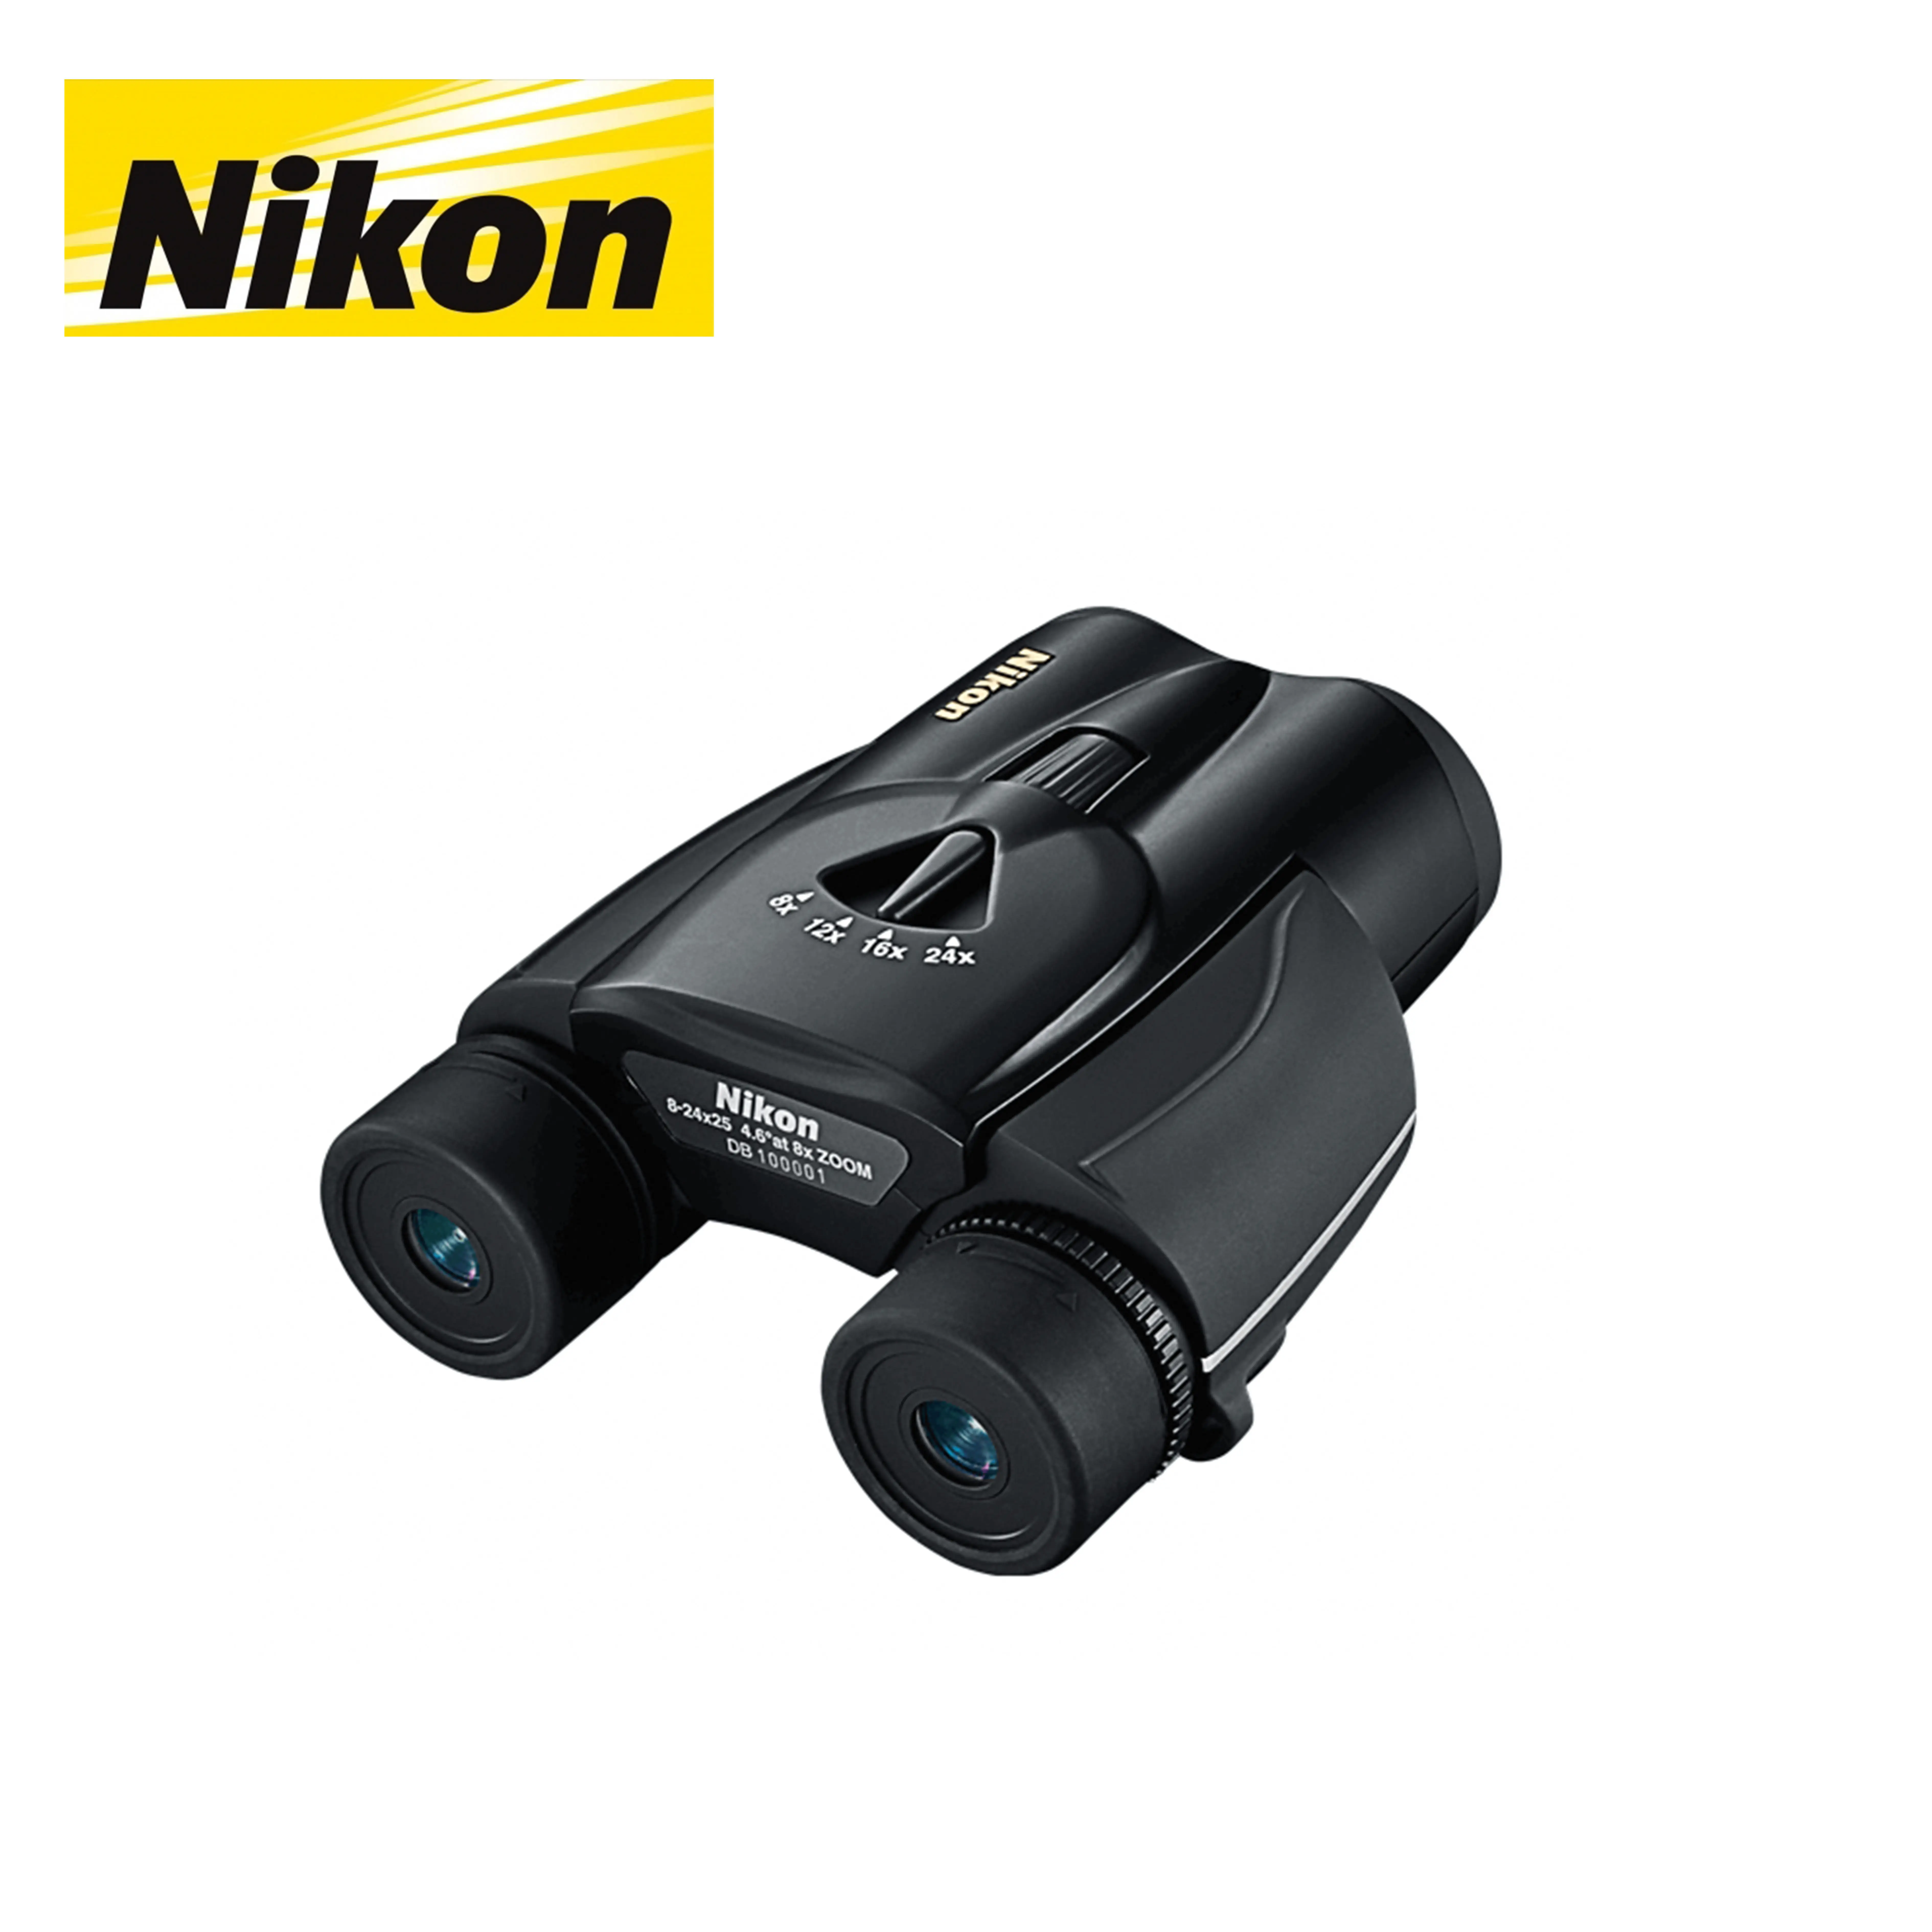 Nikon 8-24x25 Aculon T11 Zoom Binocular (negro)